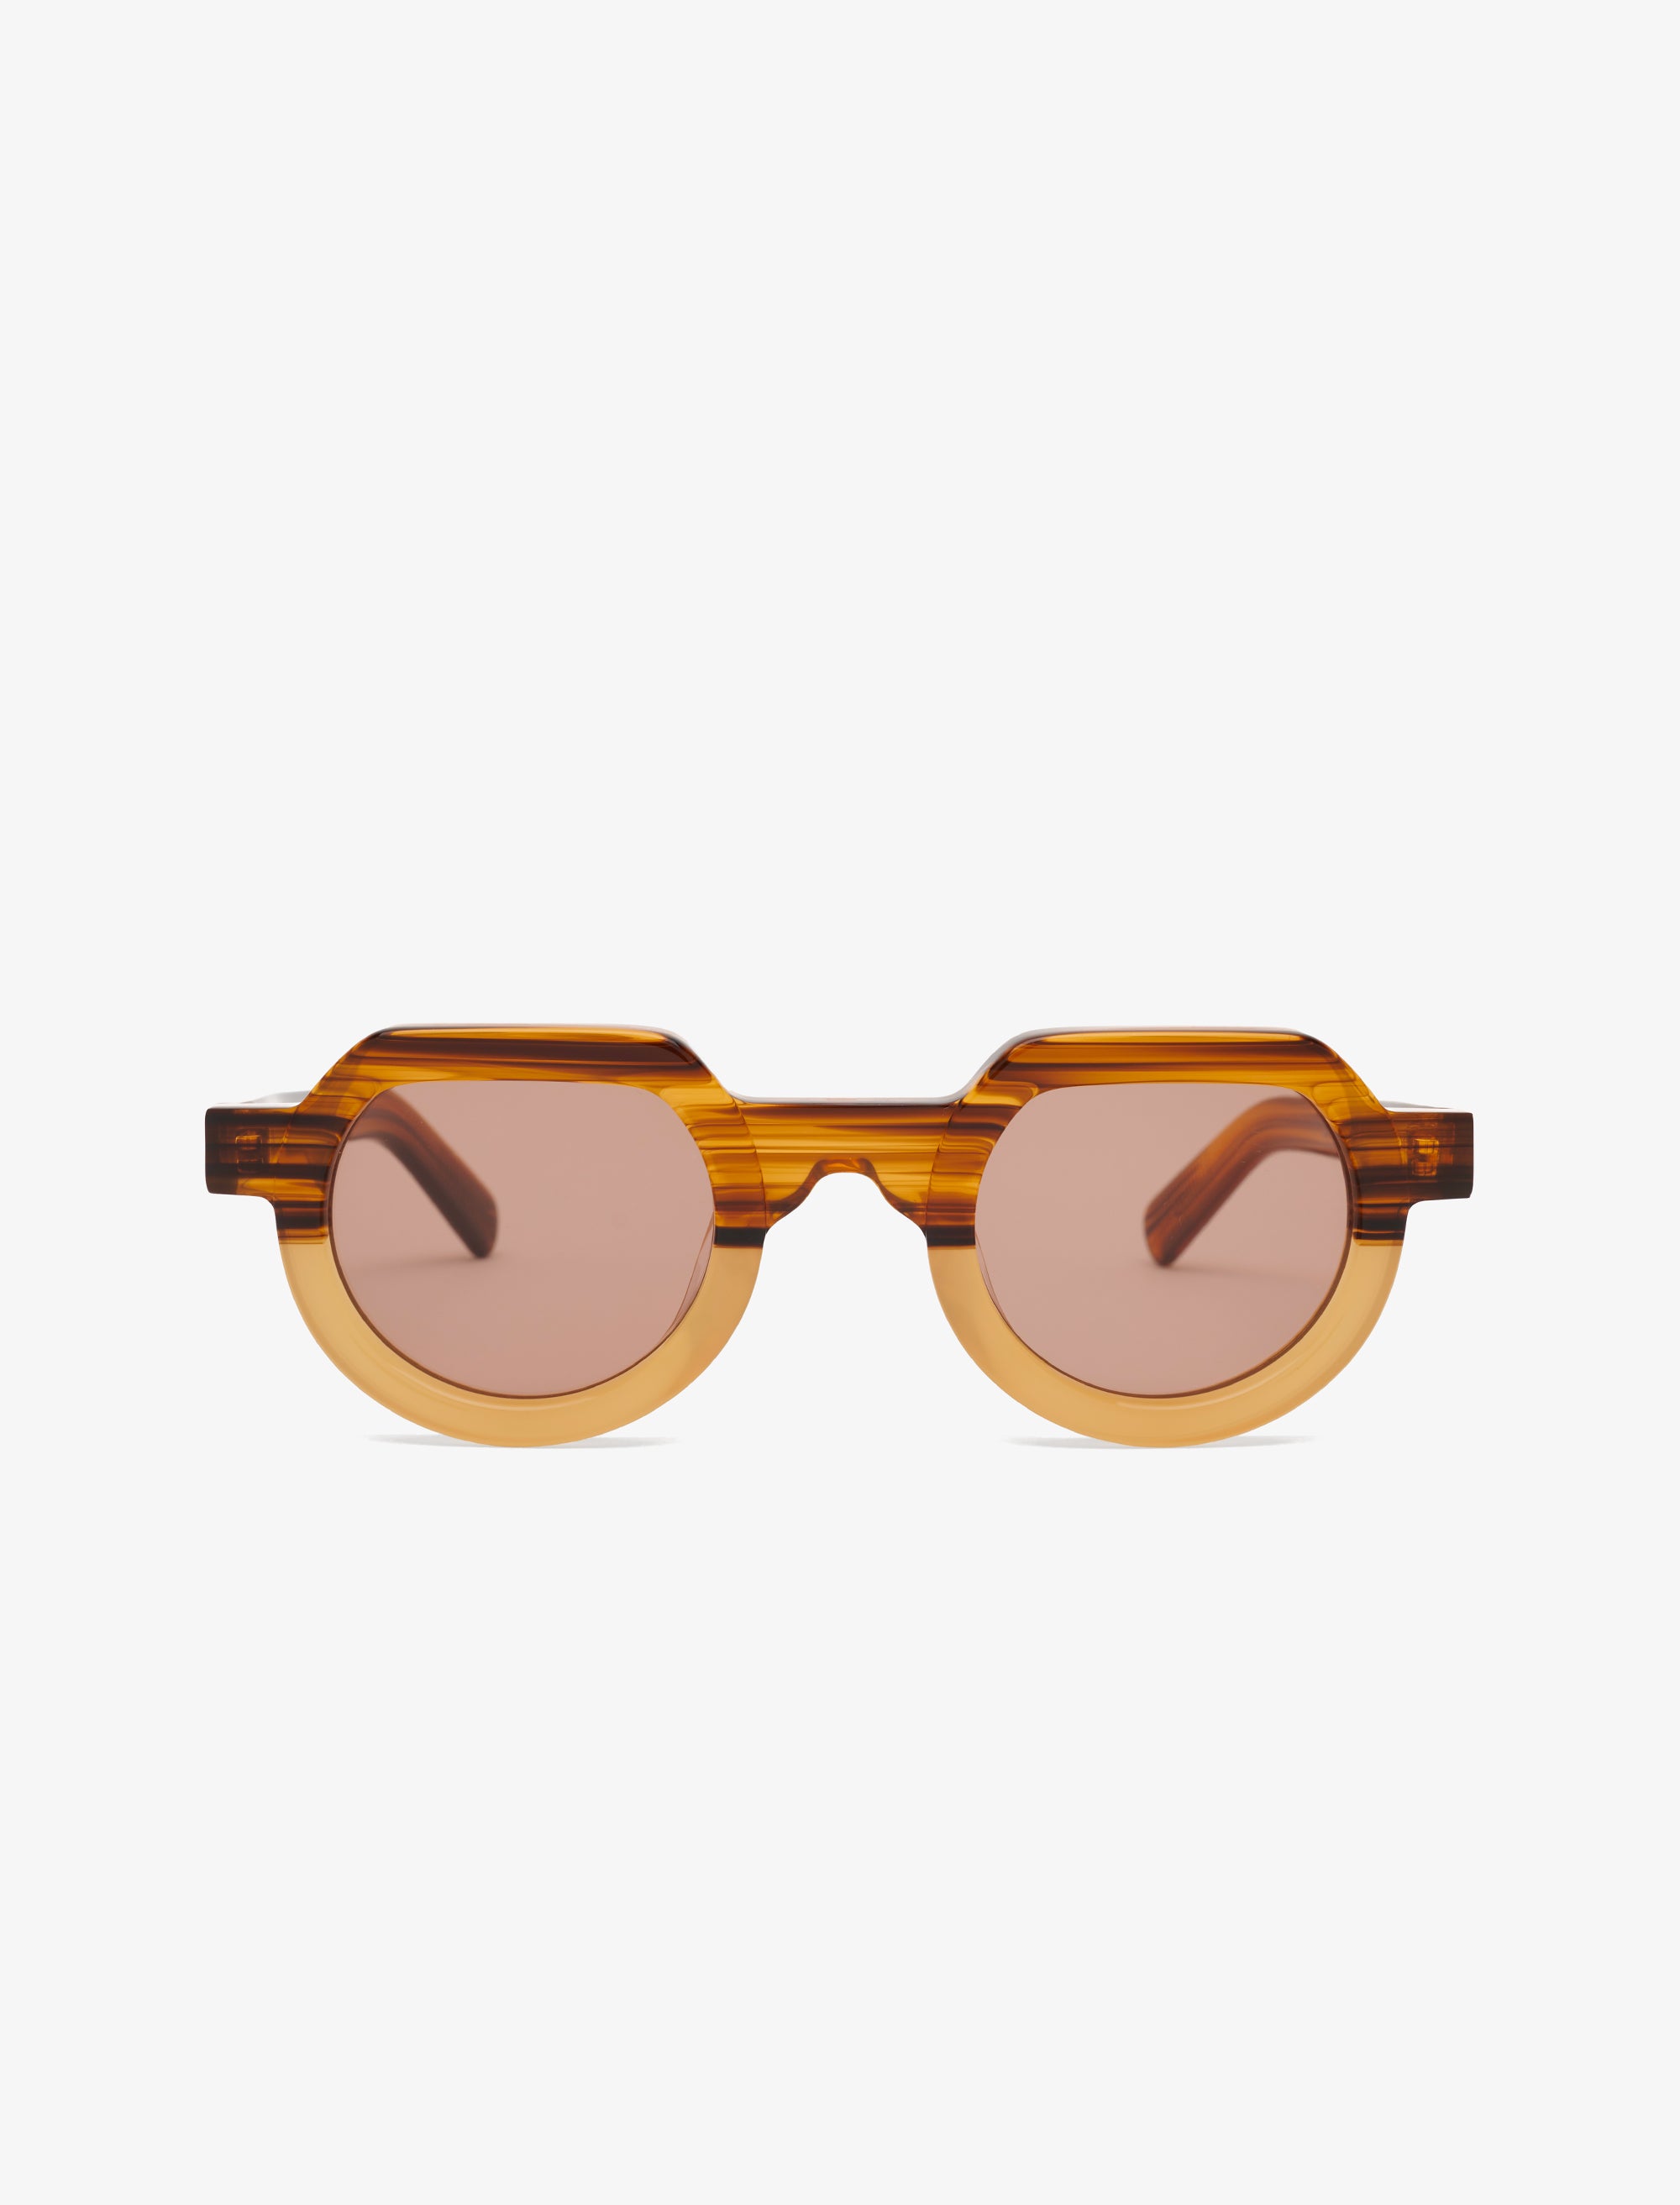 Tani Sunglasses (Orange Tortoise)